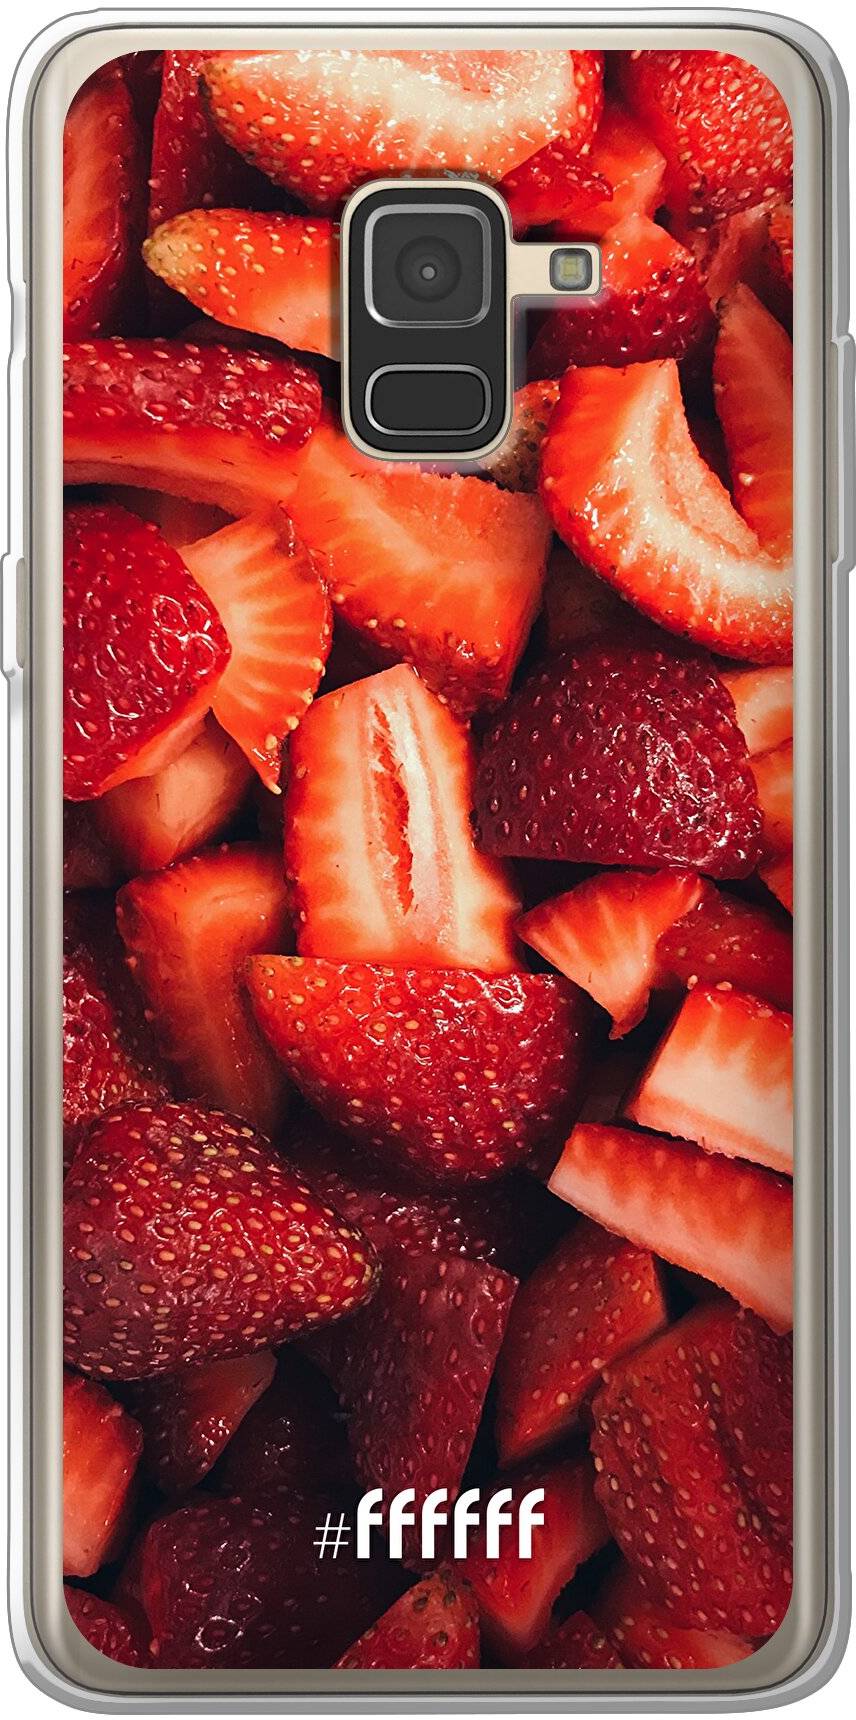 Strawberry Fields Galaxy A8 (2018)